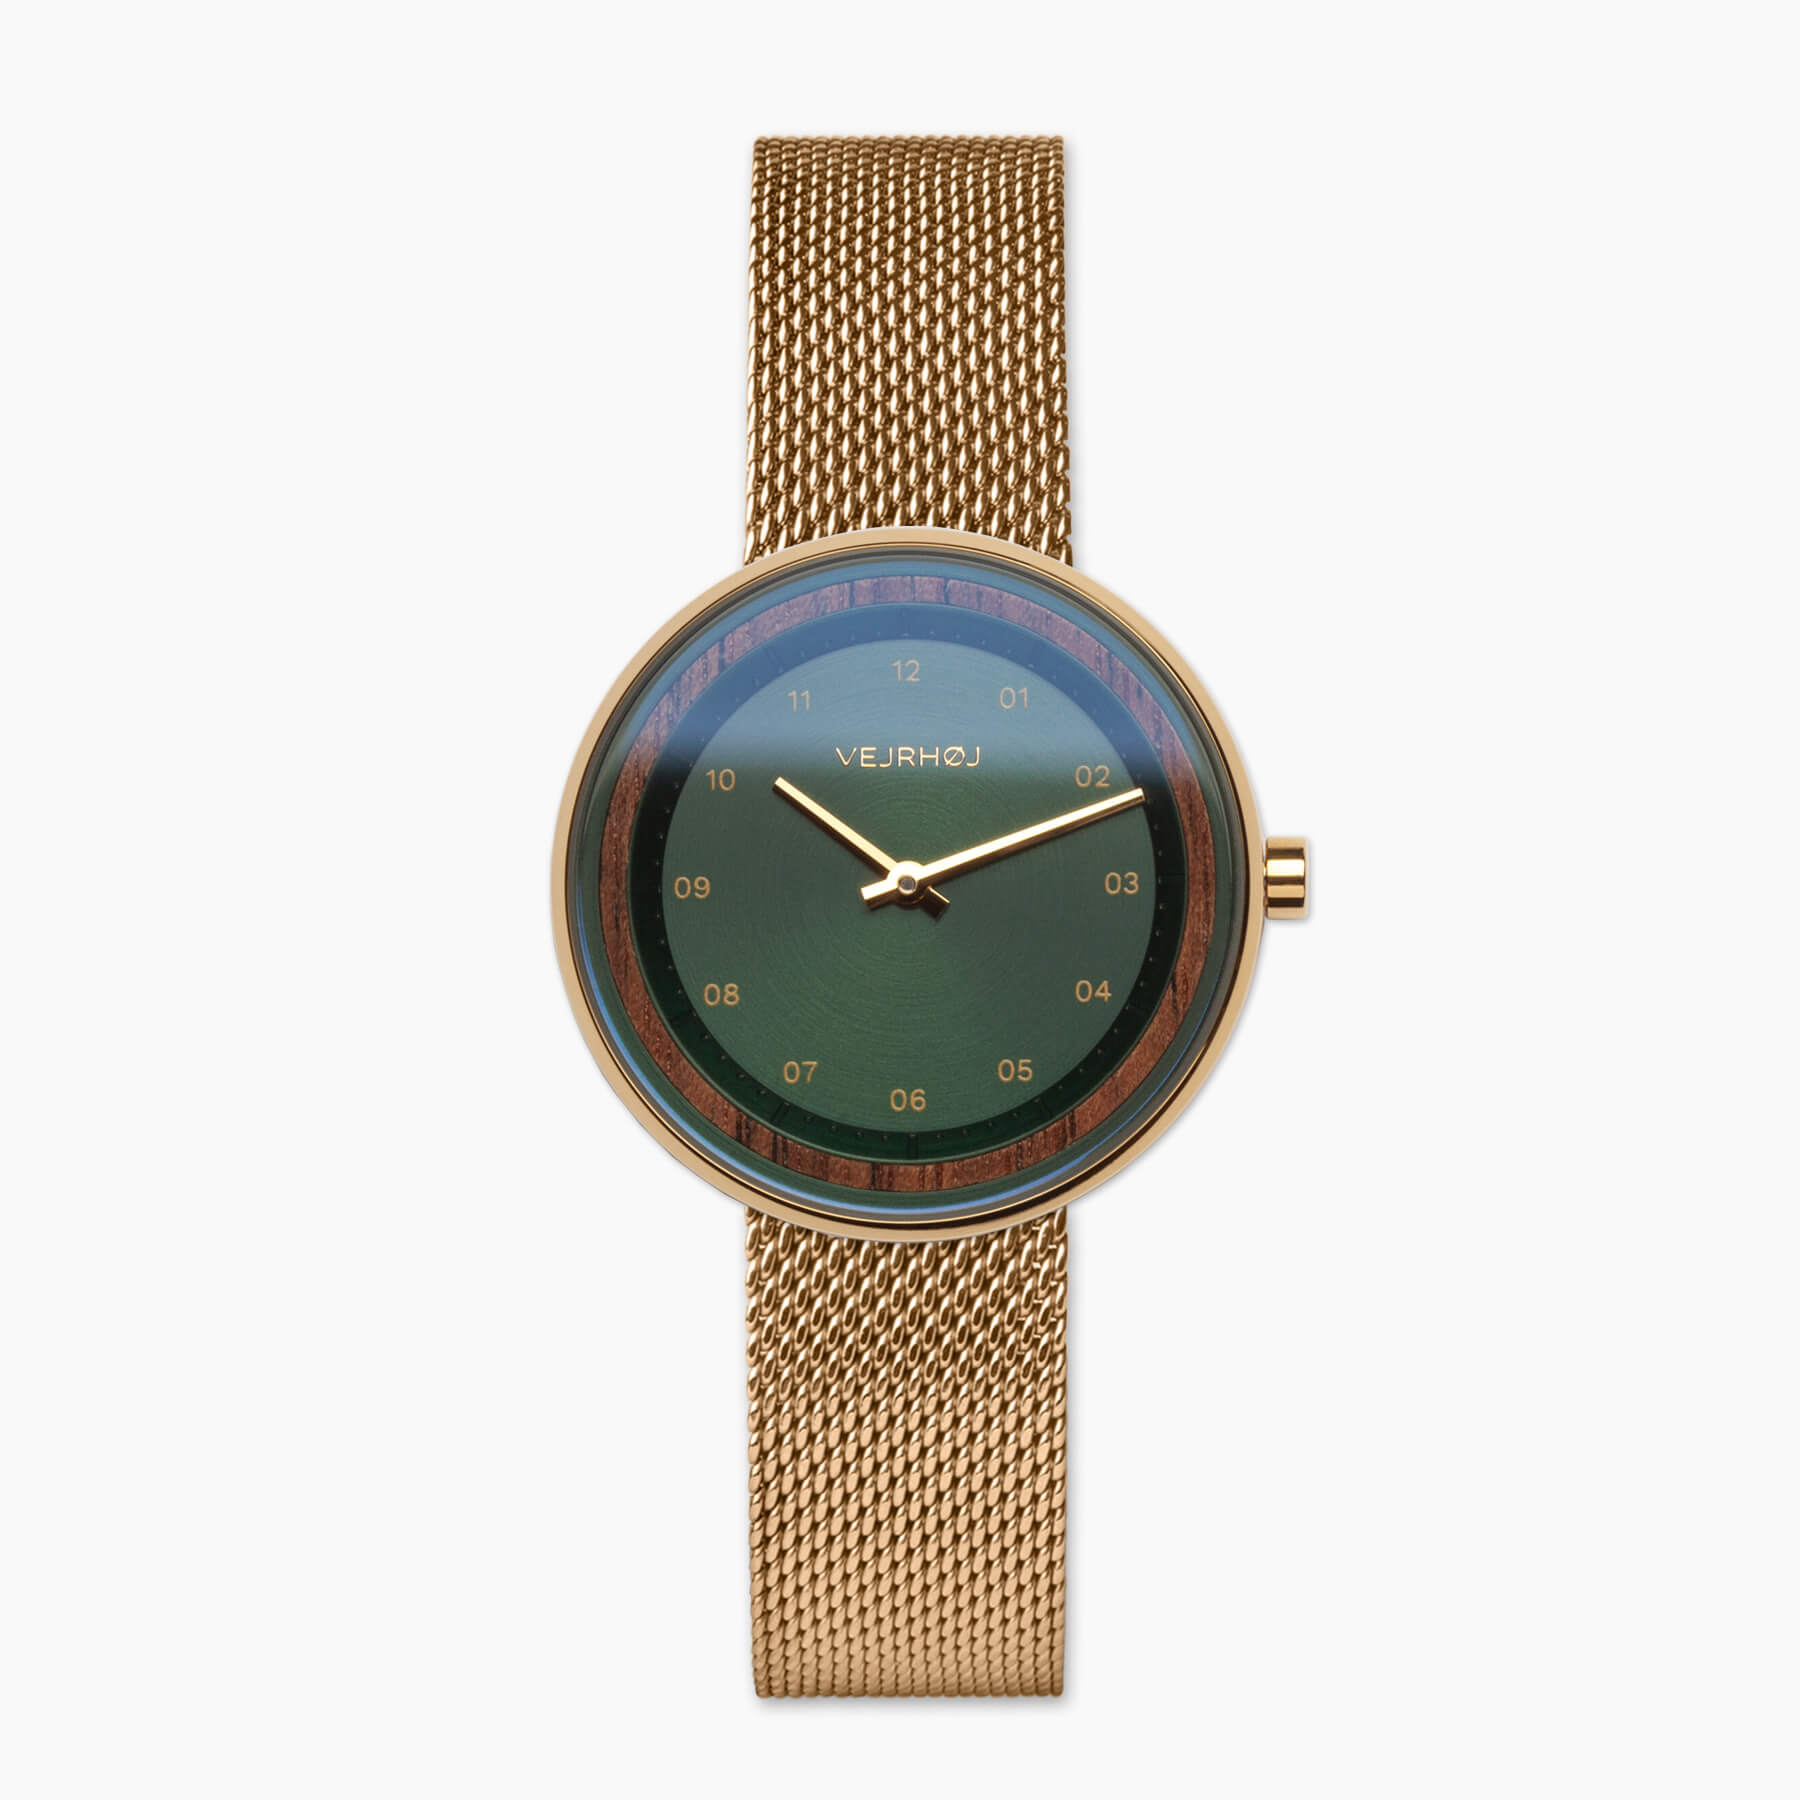 Green women's watch with a golden mesh band